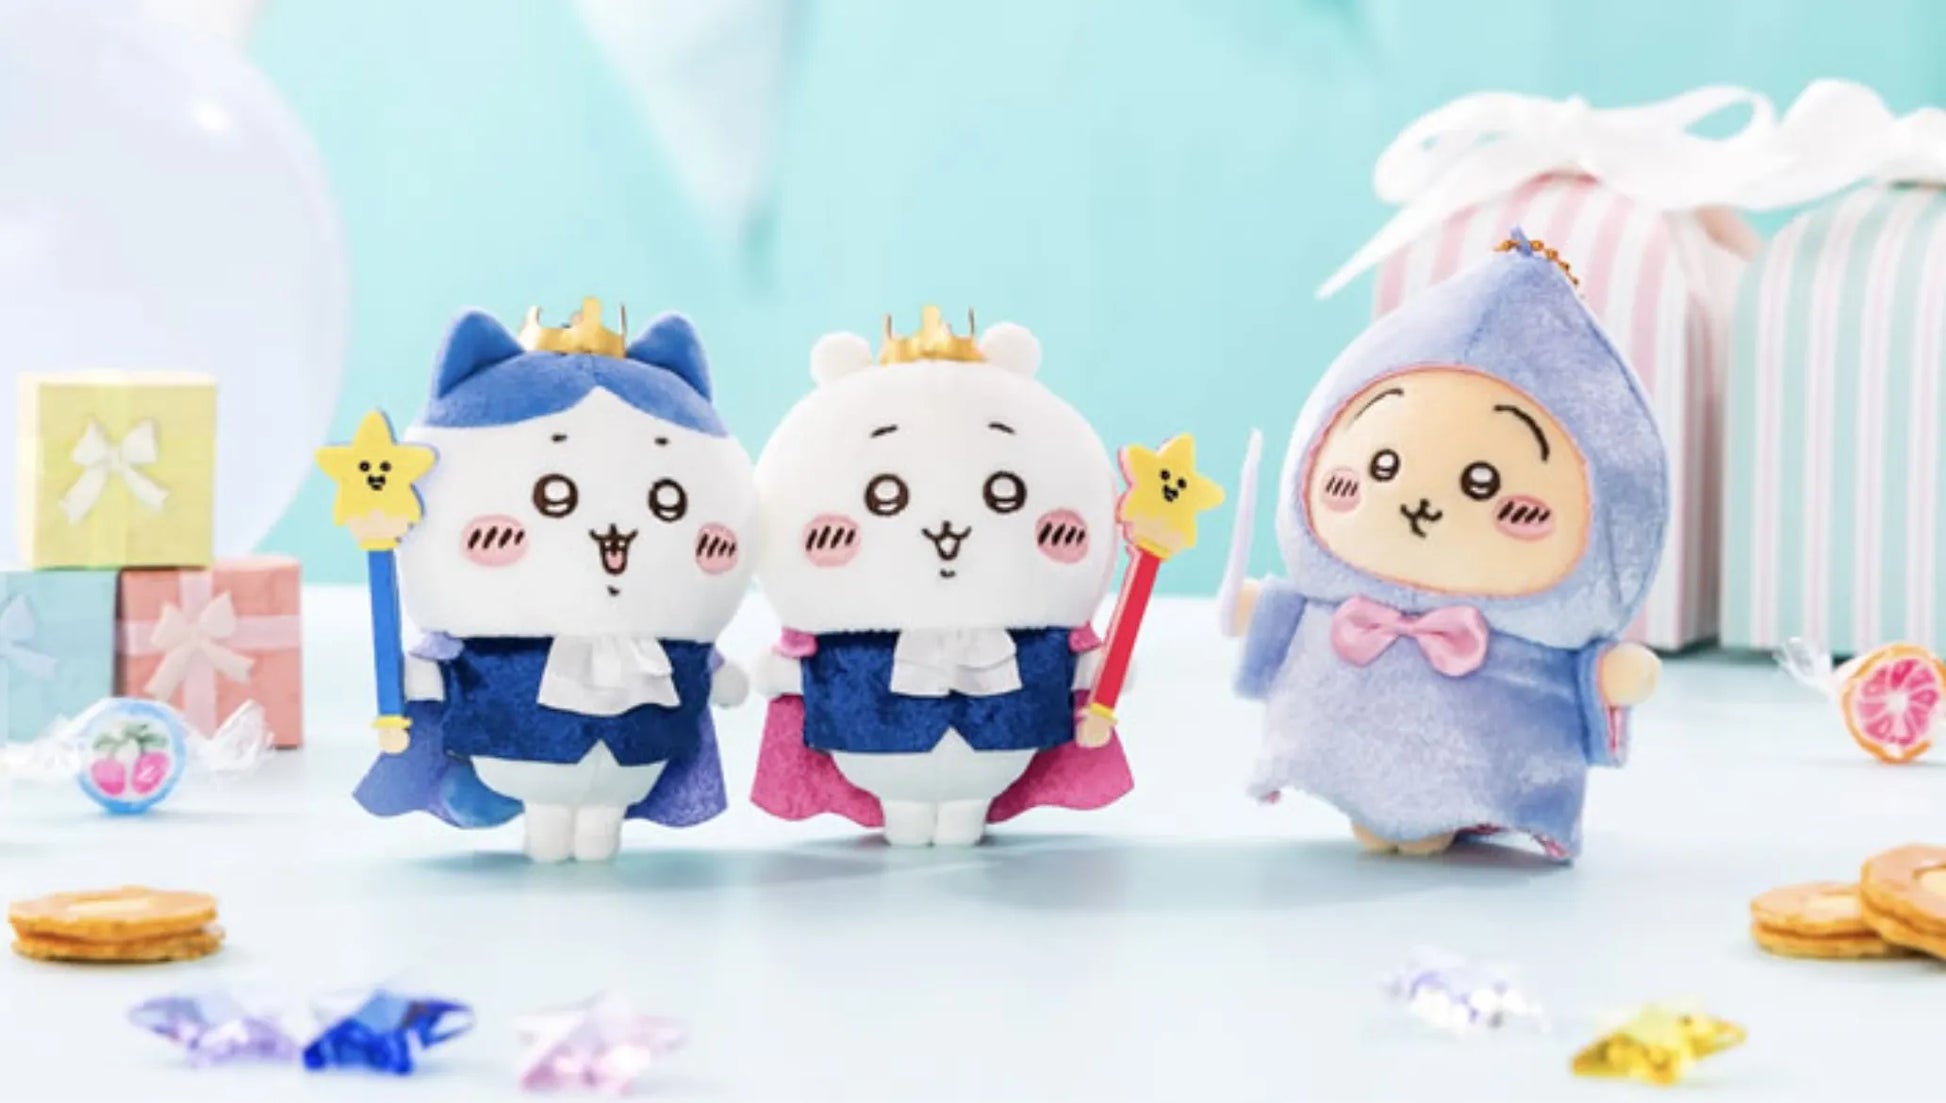 Japan ChiiKawa Birthday Series -  Prince and Fairy Godmother | ChiiKawa Hachiware Usagi Momonga - Mini Plush Doll keychain